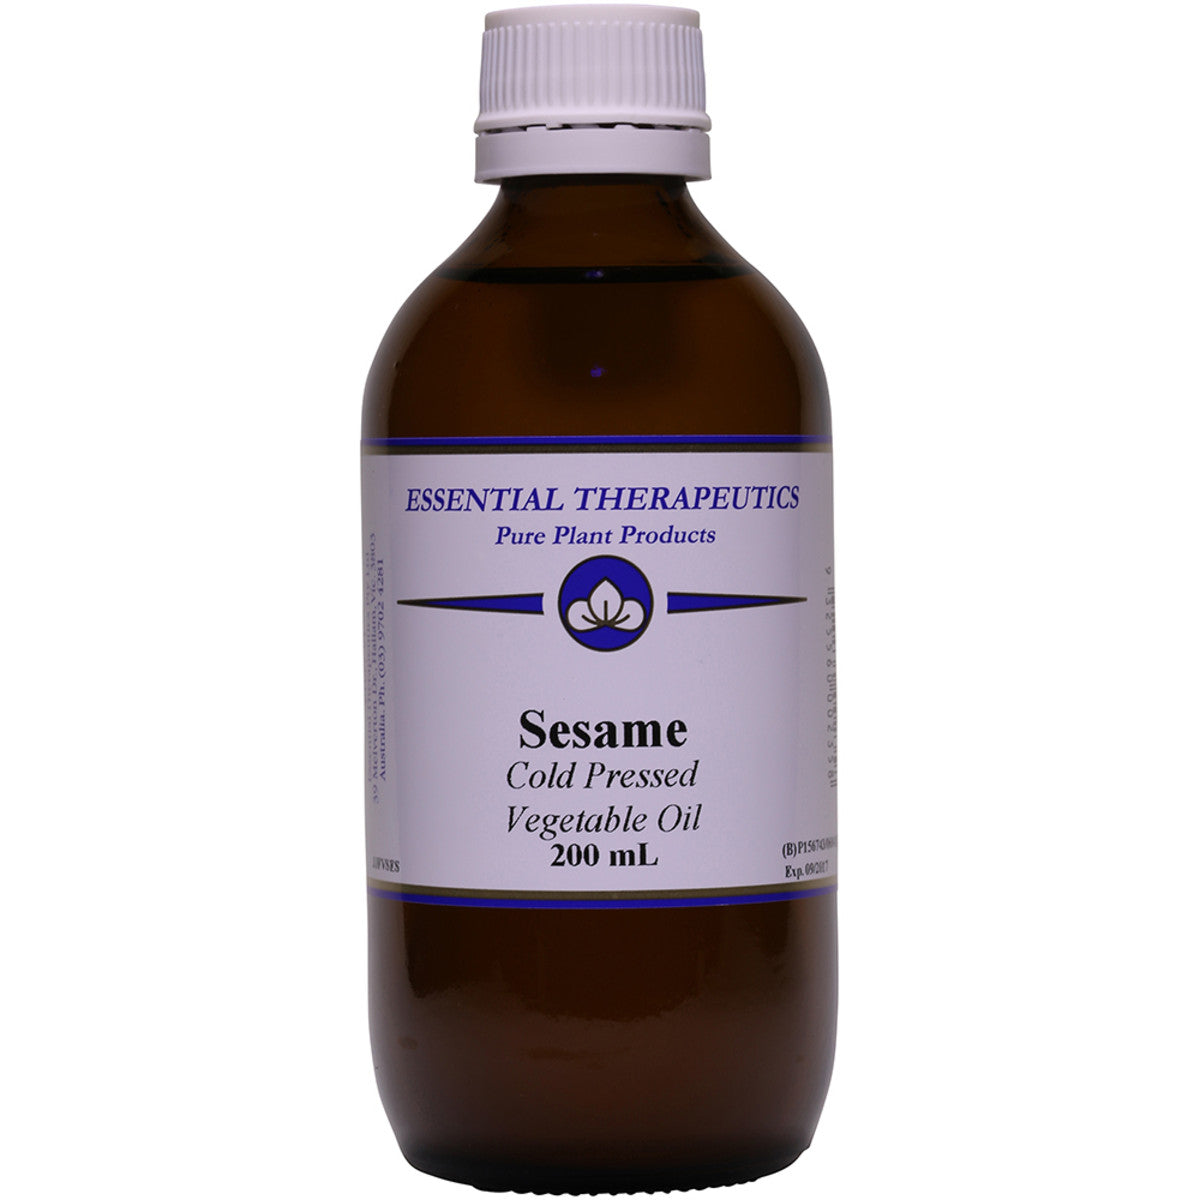 Essential Therapeutics - Vege Oil Sesame Oil Virgin 200ml